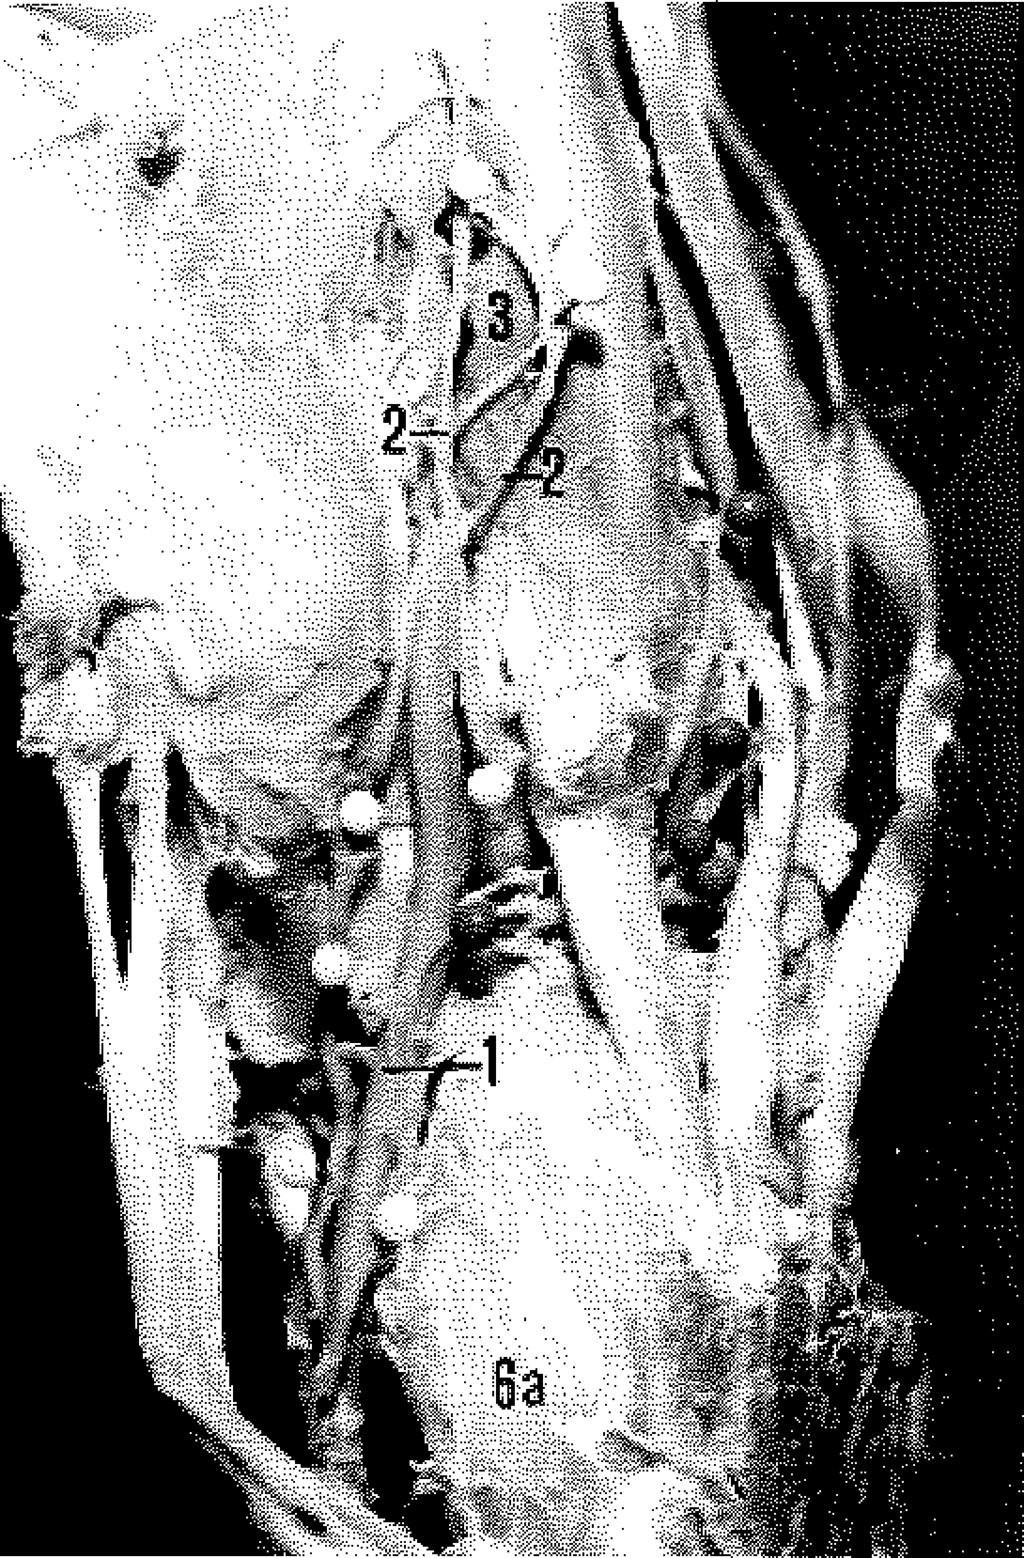 , Rabischong, P., Mansat, M.: Arterial supply of ligaments of metacarpophalangeal joint. J. Hand. Surg. 7: 445, 1982. 11. Bilbo, J.T., Stern, P.H.: The first dorsal interosseous muscle: An anatomical study.